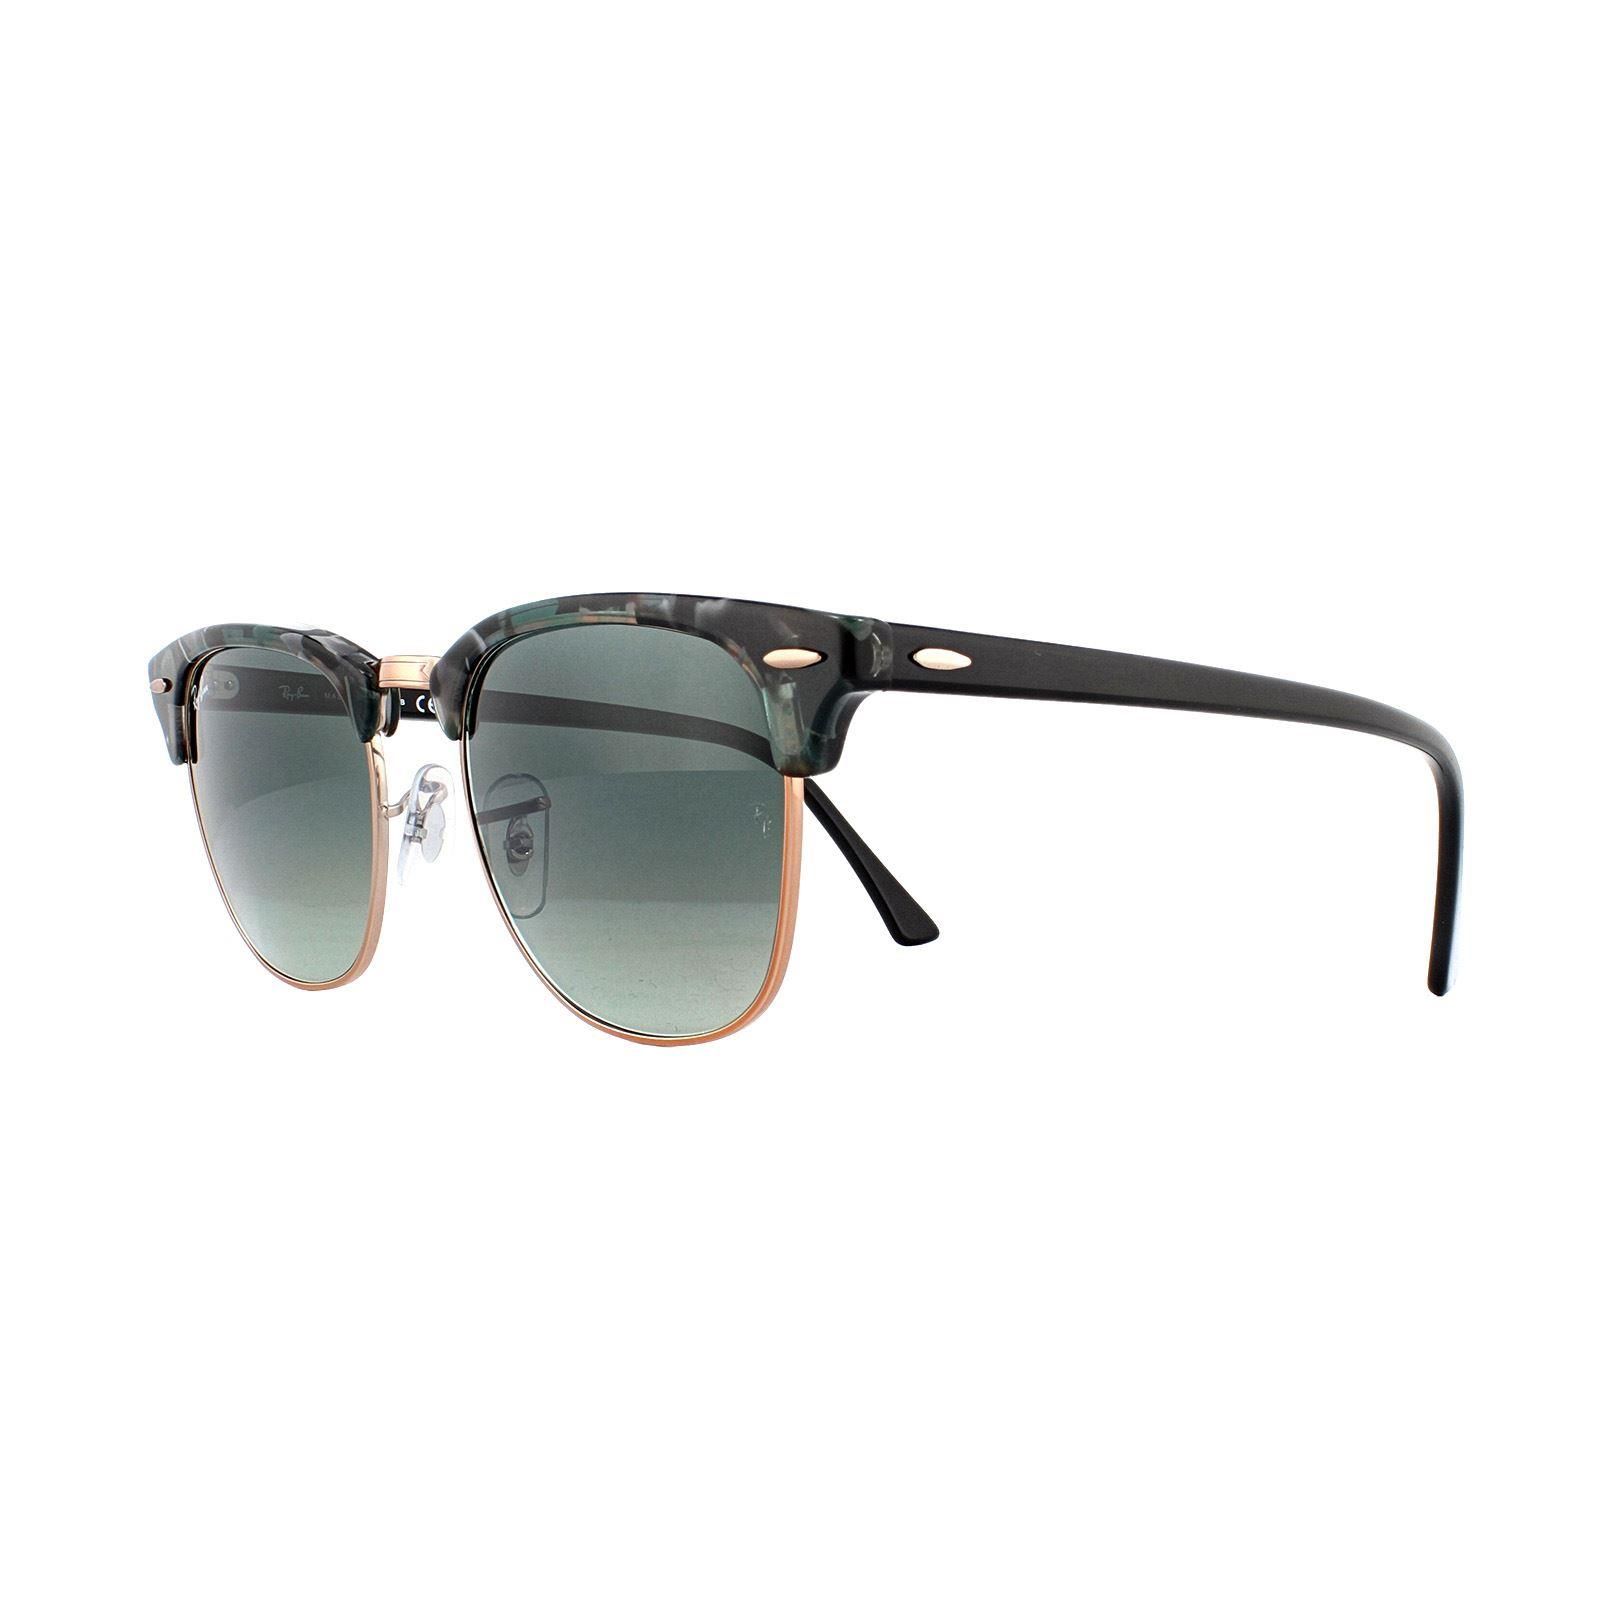 Ray-Ban Sunglasses Clubmaster 3016 114530 Matt Tortoise Silver Flash Mirror 51mm